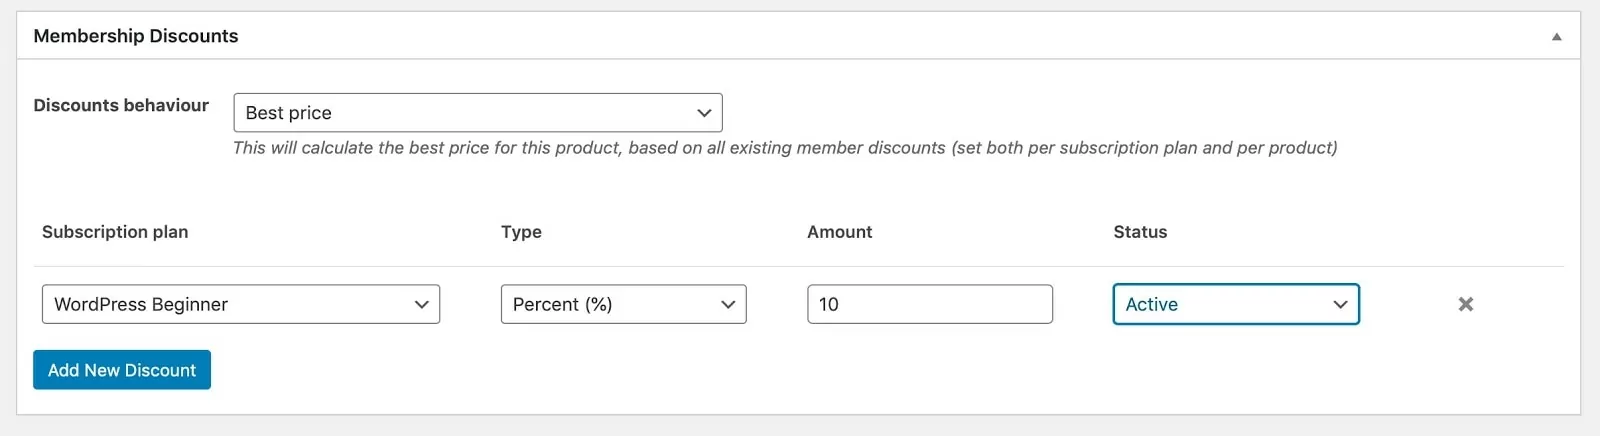 Screenshot of a membership discount